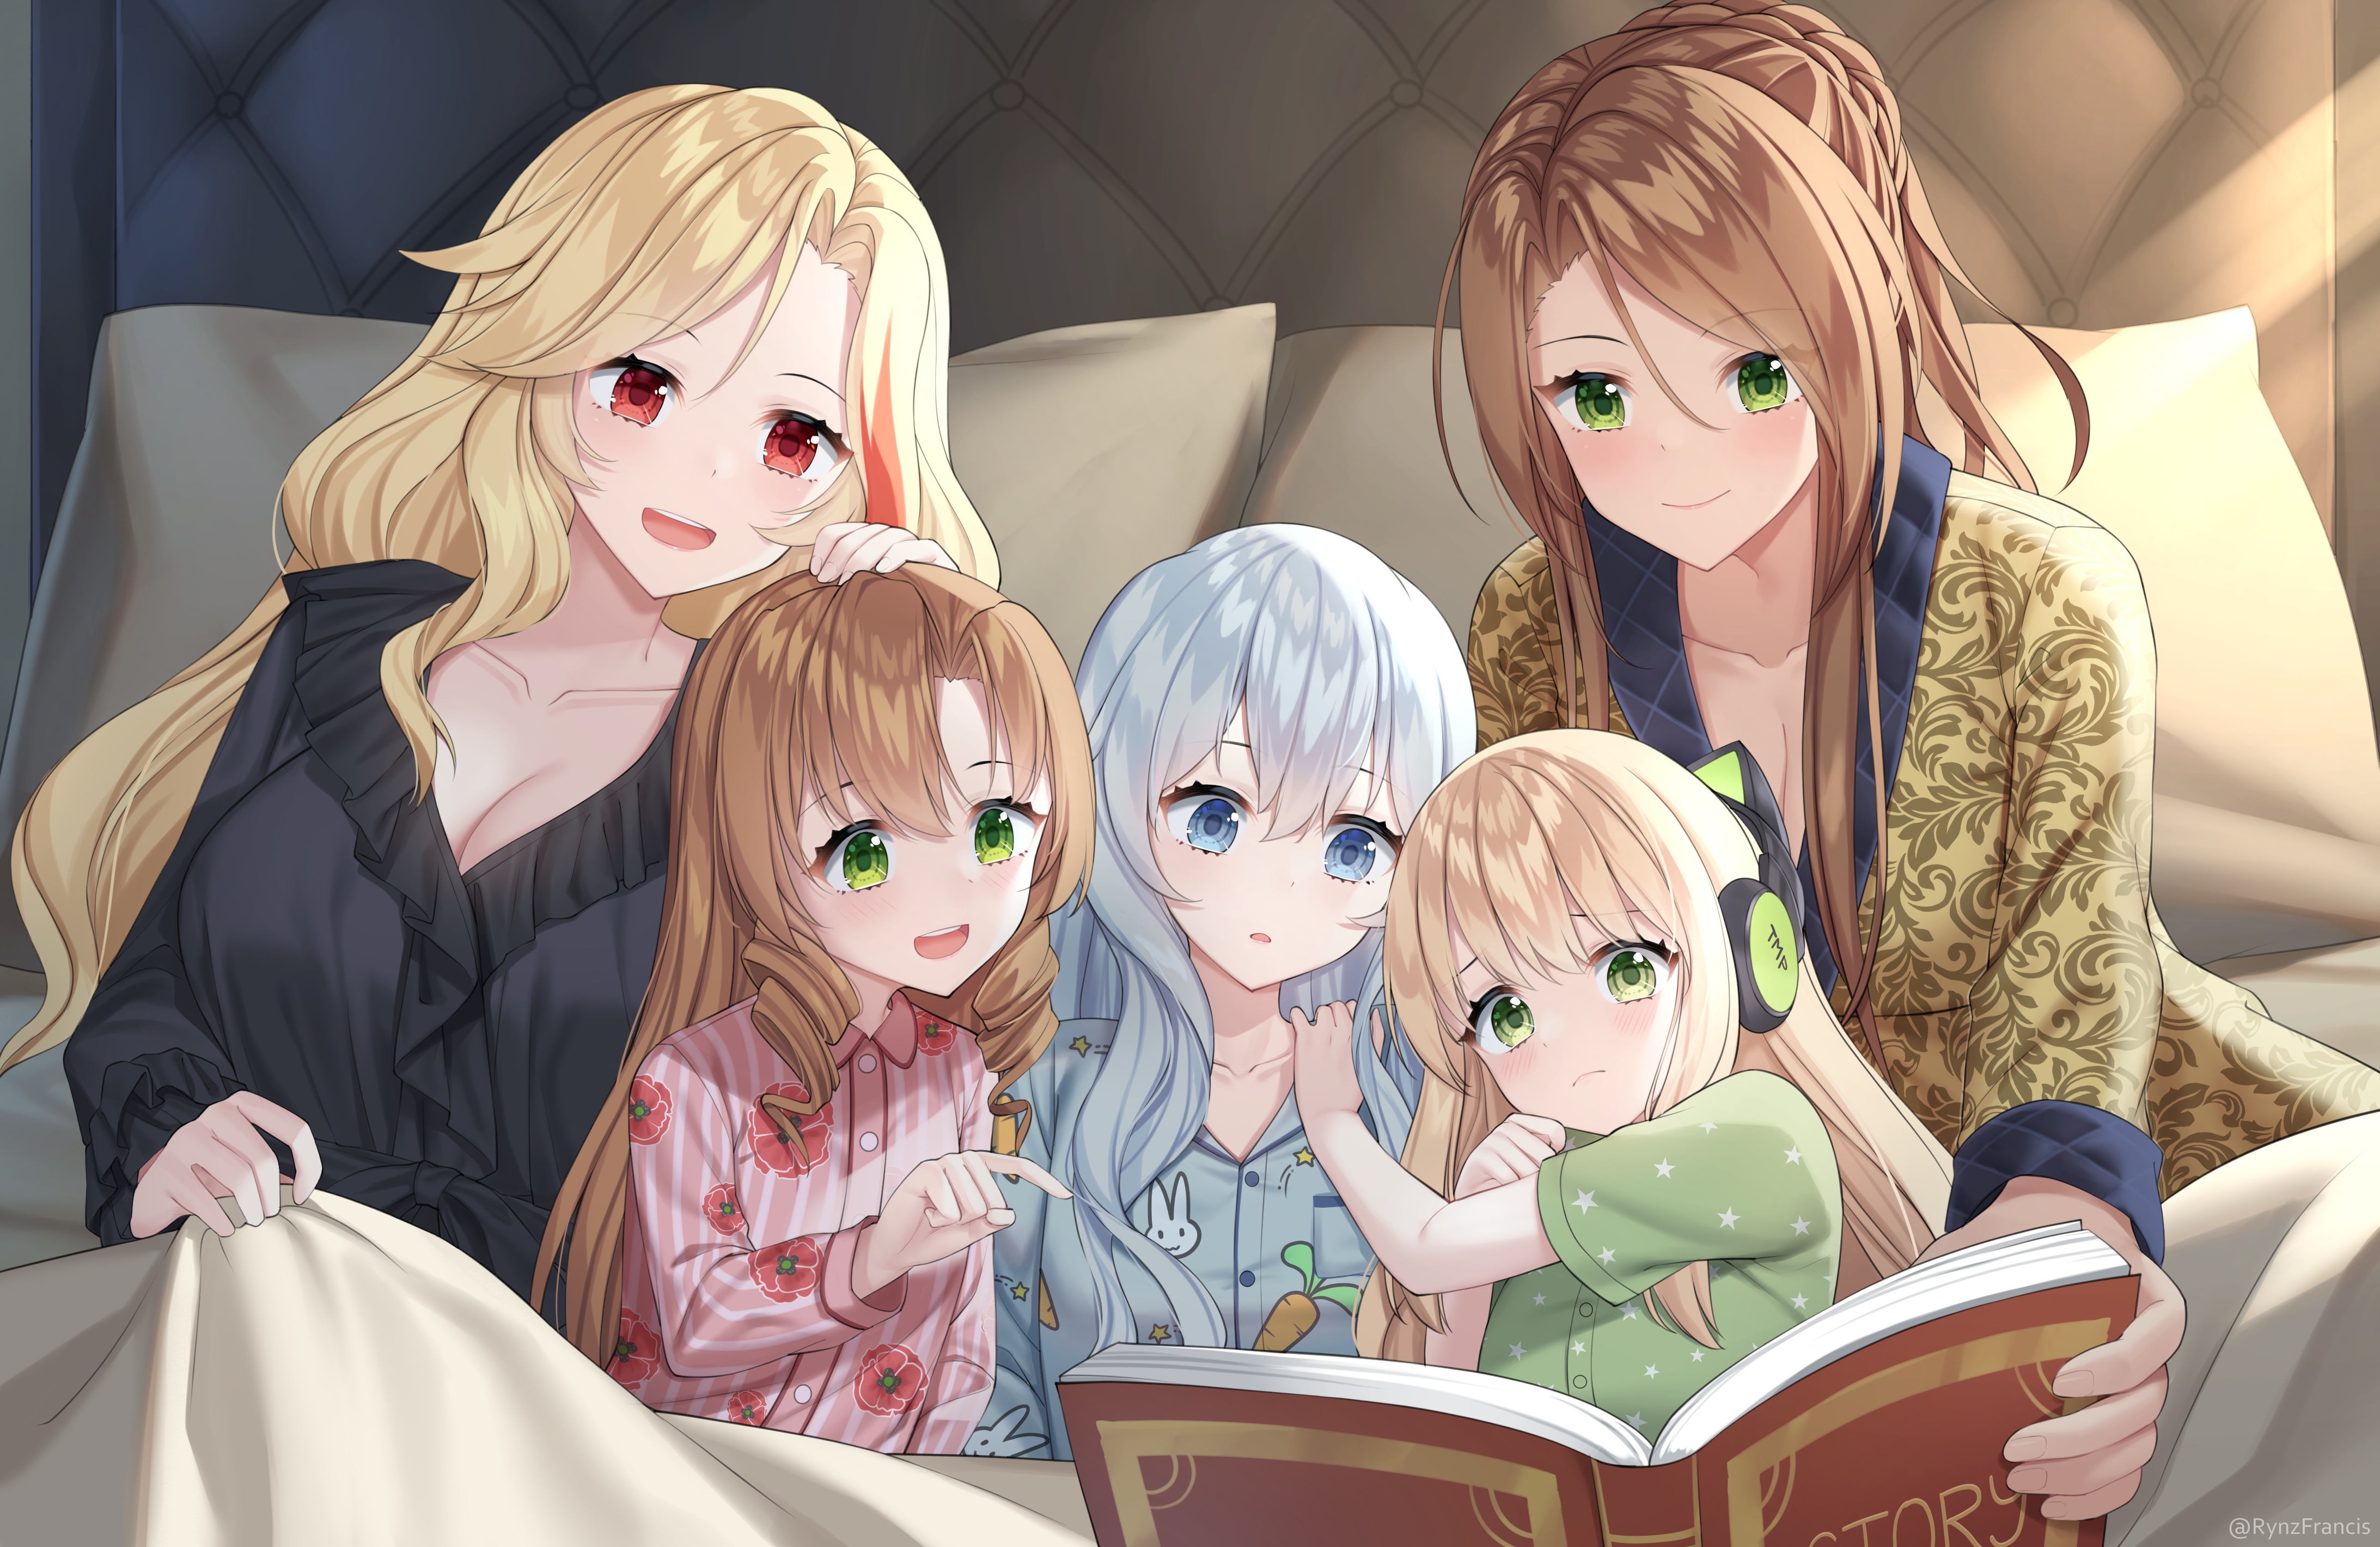 Anime 4370x2840 anime anime girls RynzFrancis artwork in bed loli books blonde brunette blue hair reading